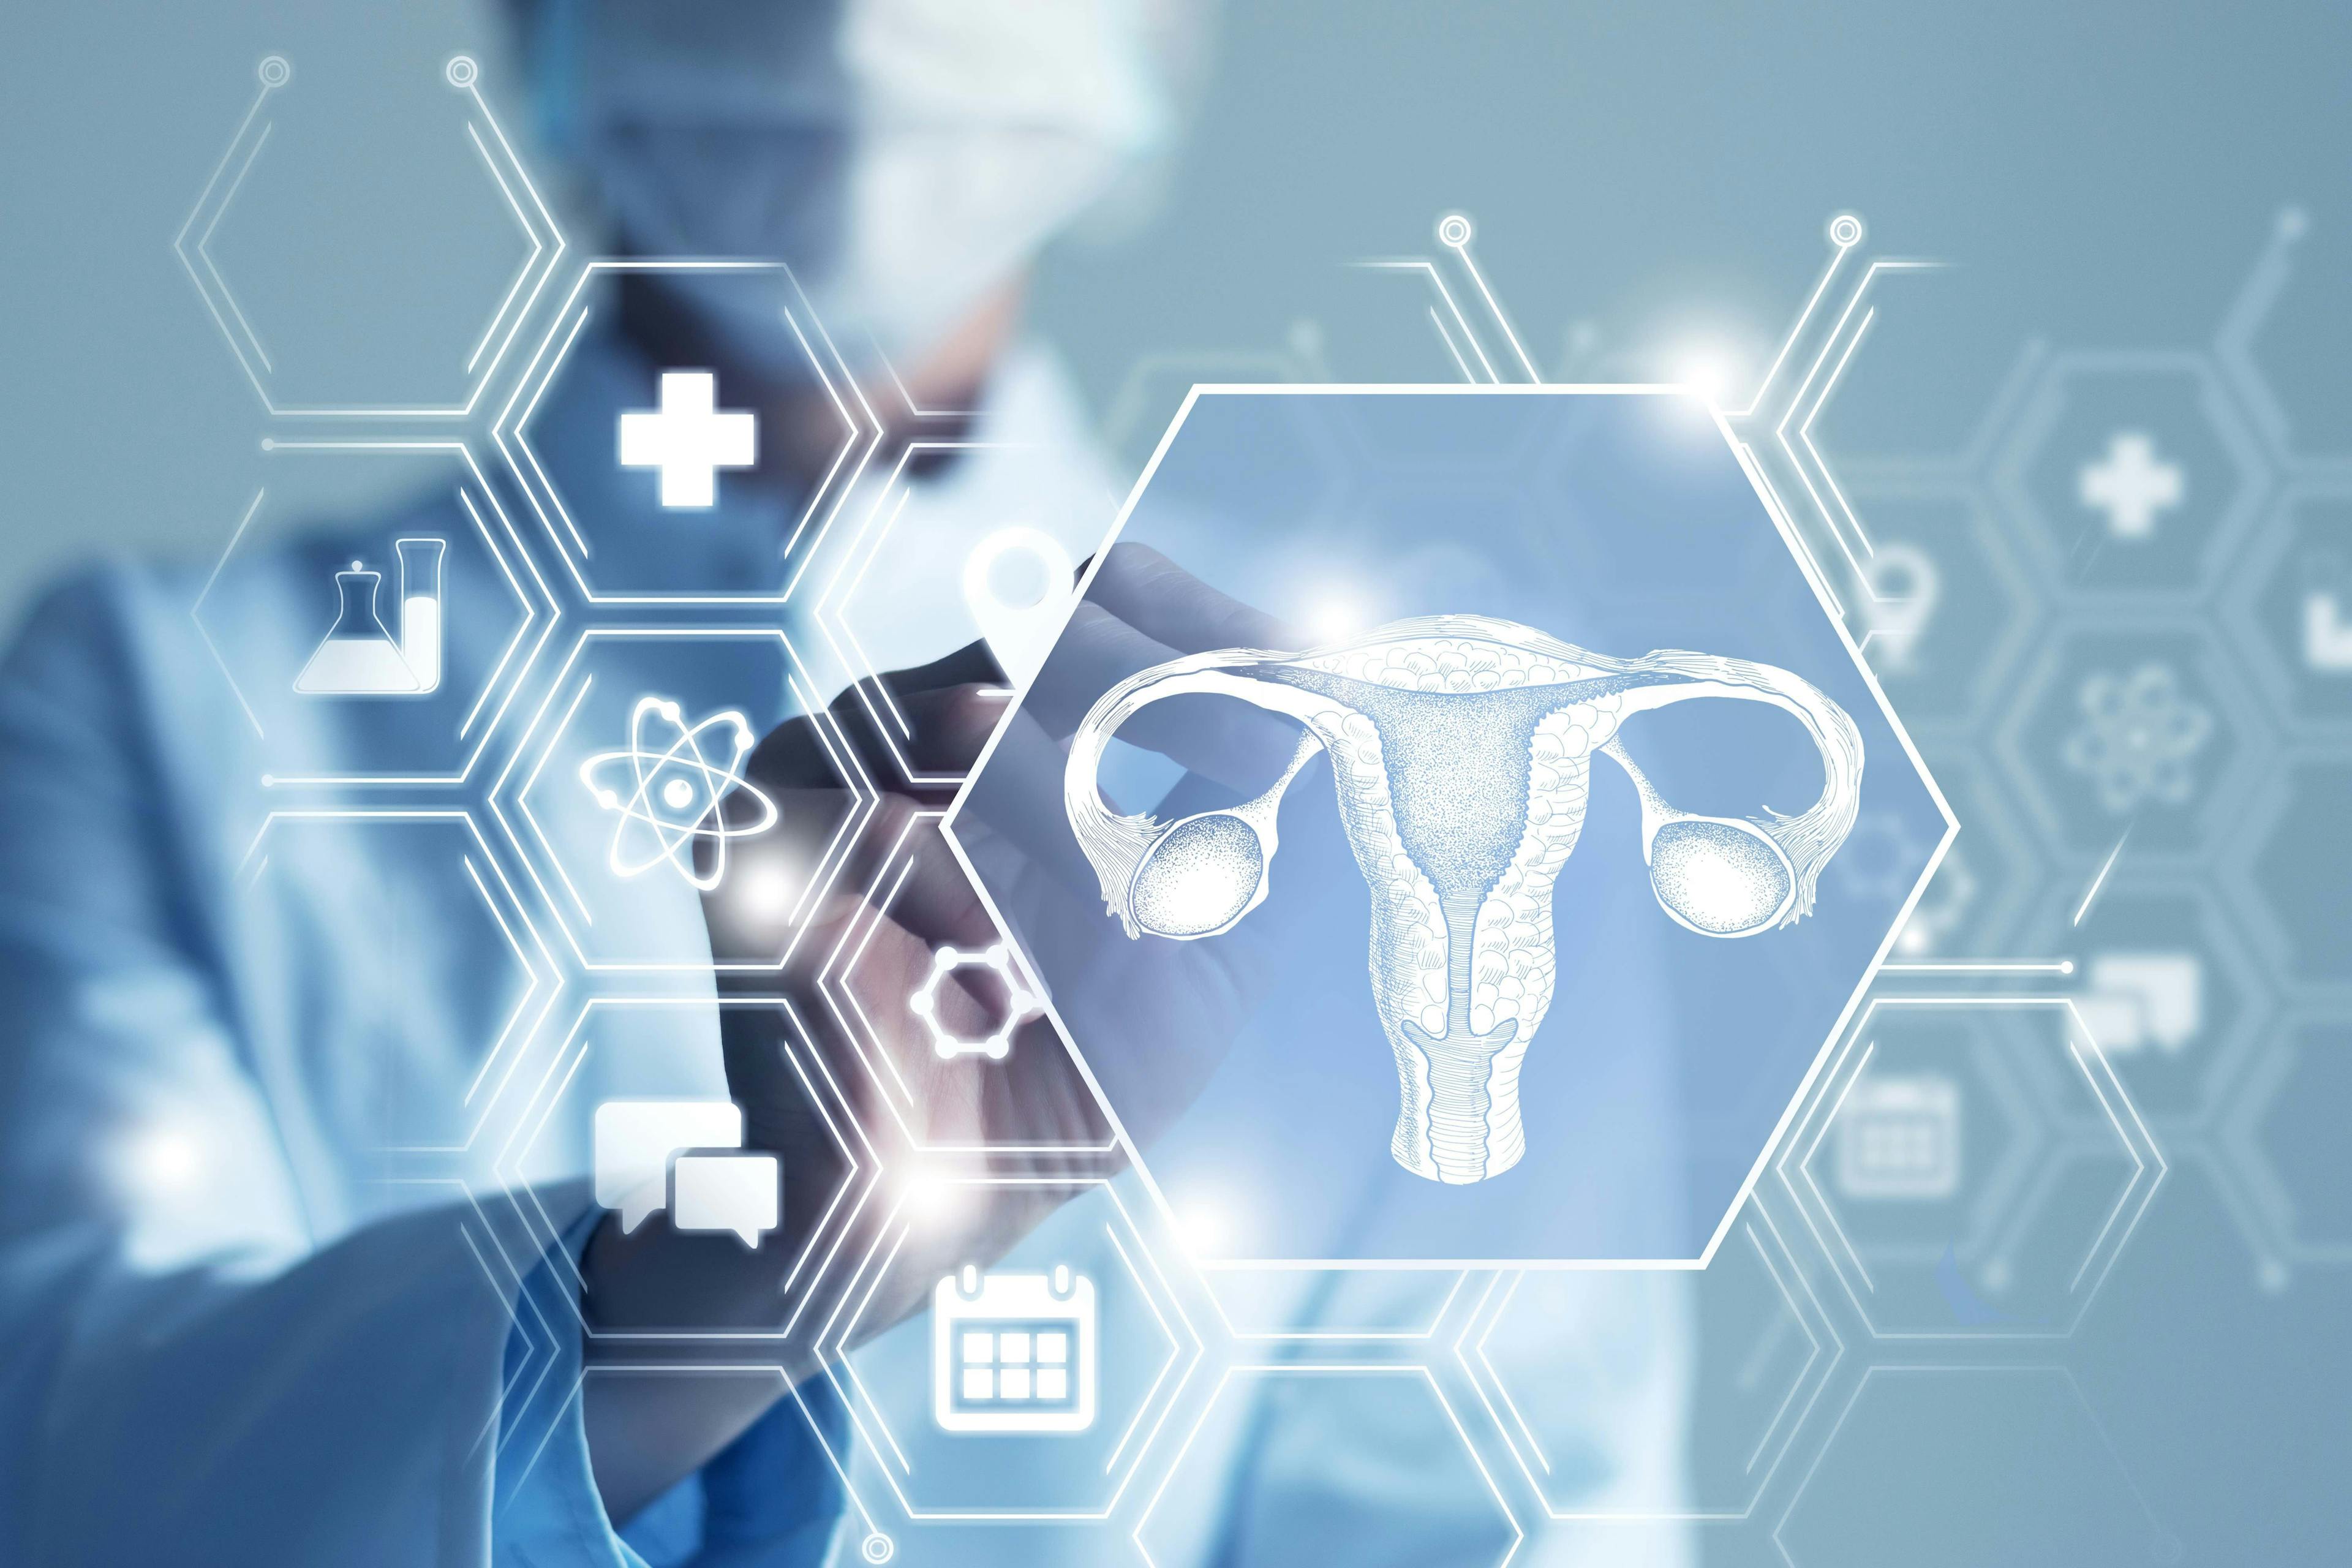 Ultrasonography-Based Ovarian Tumor Risk Models Show High Performance in US Cohort